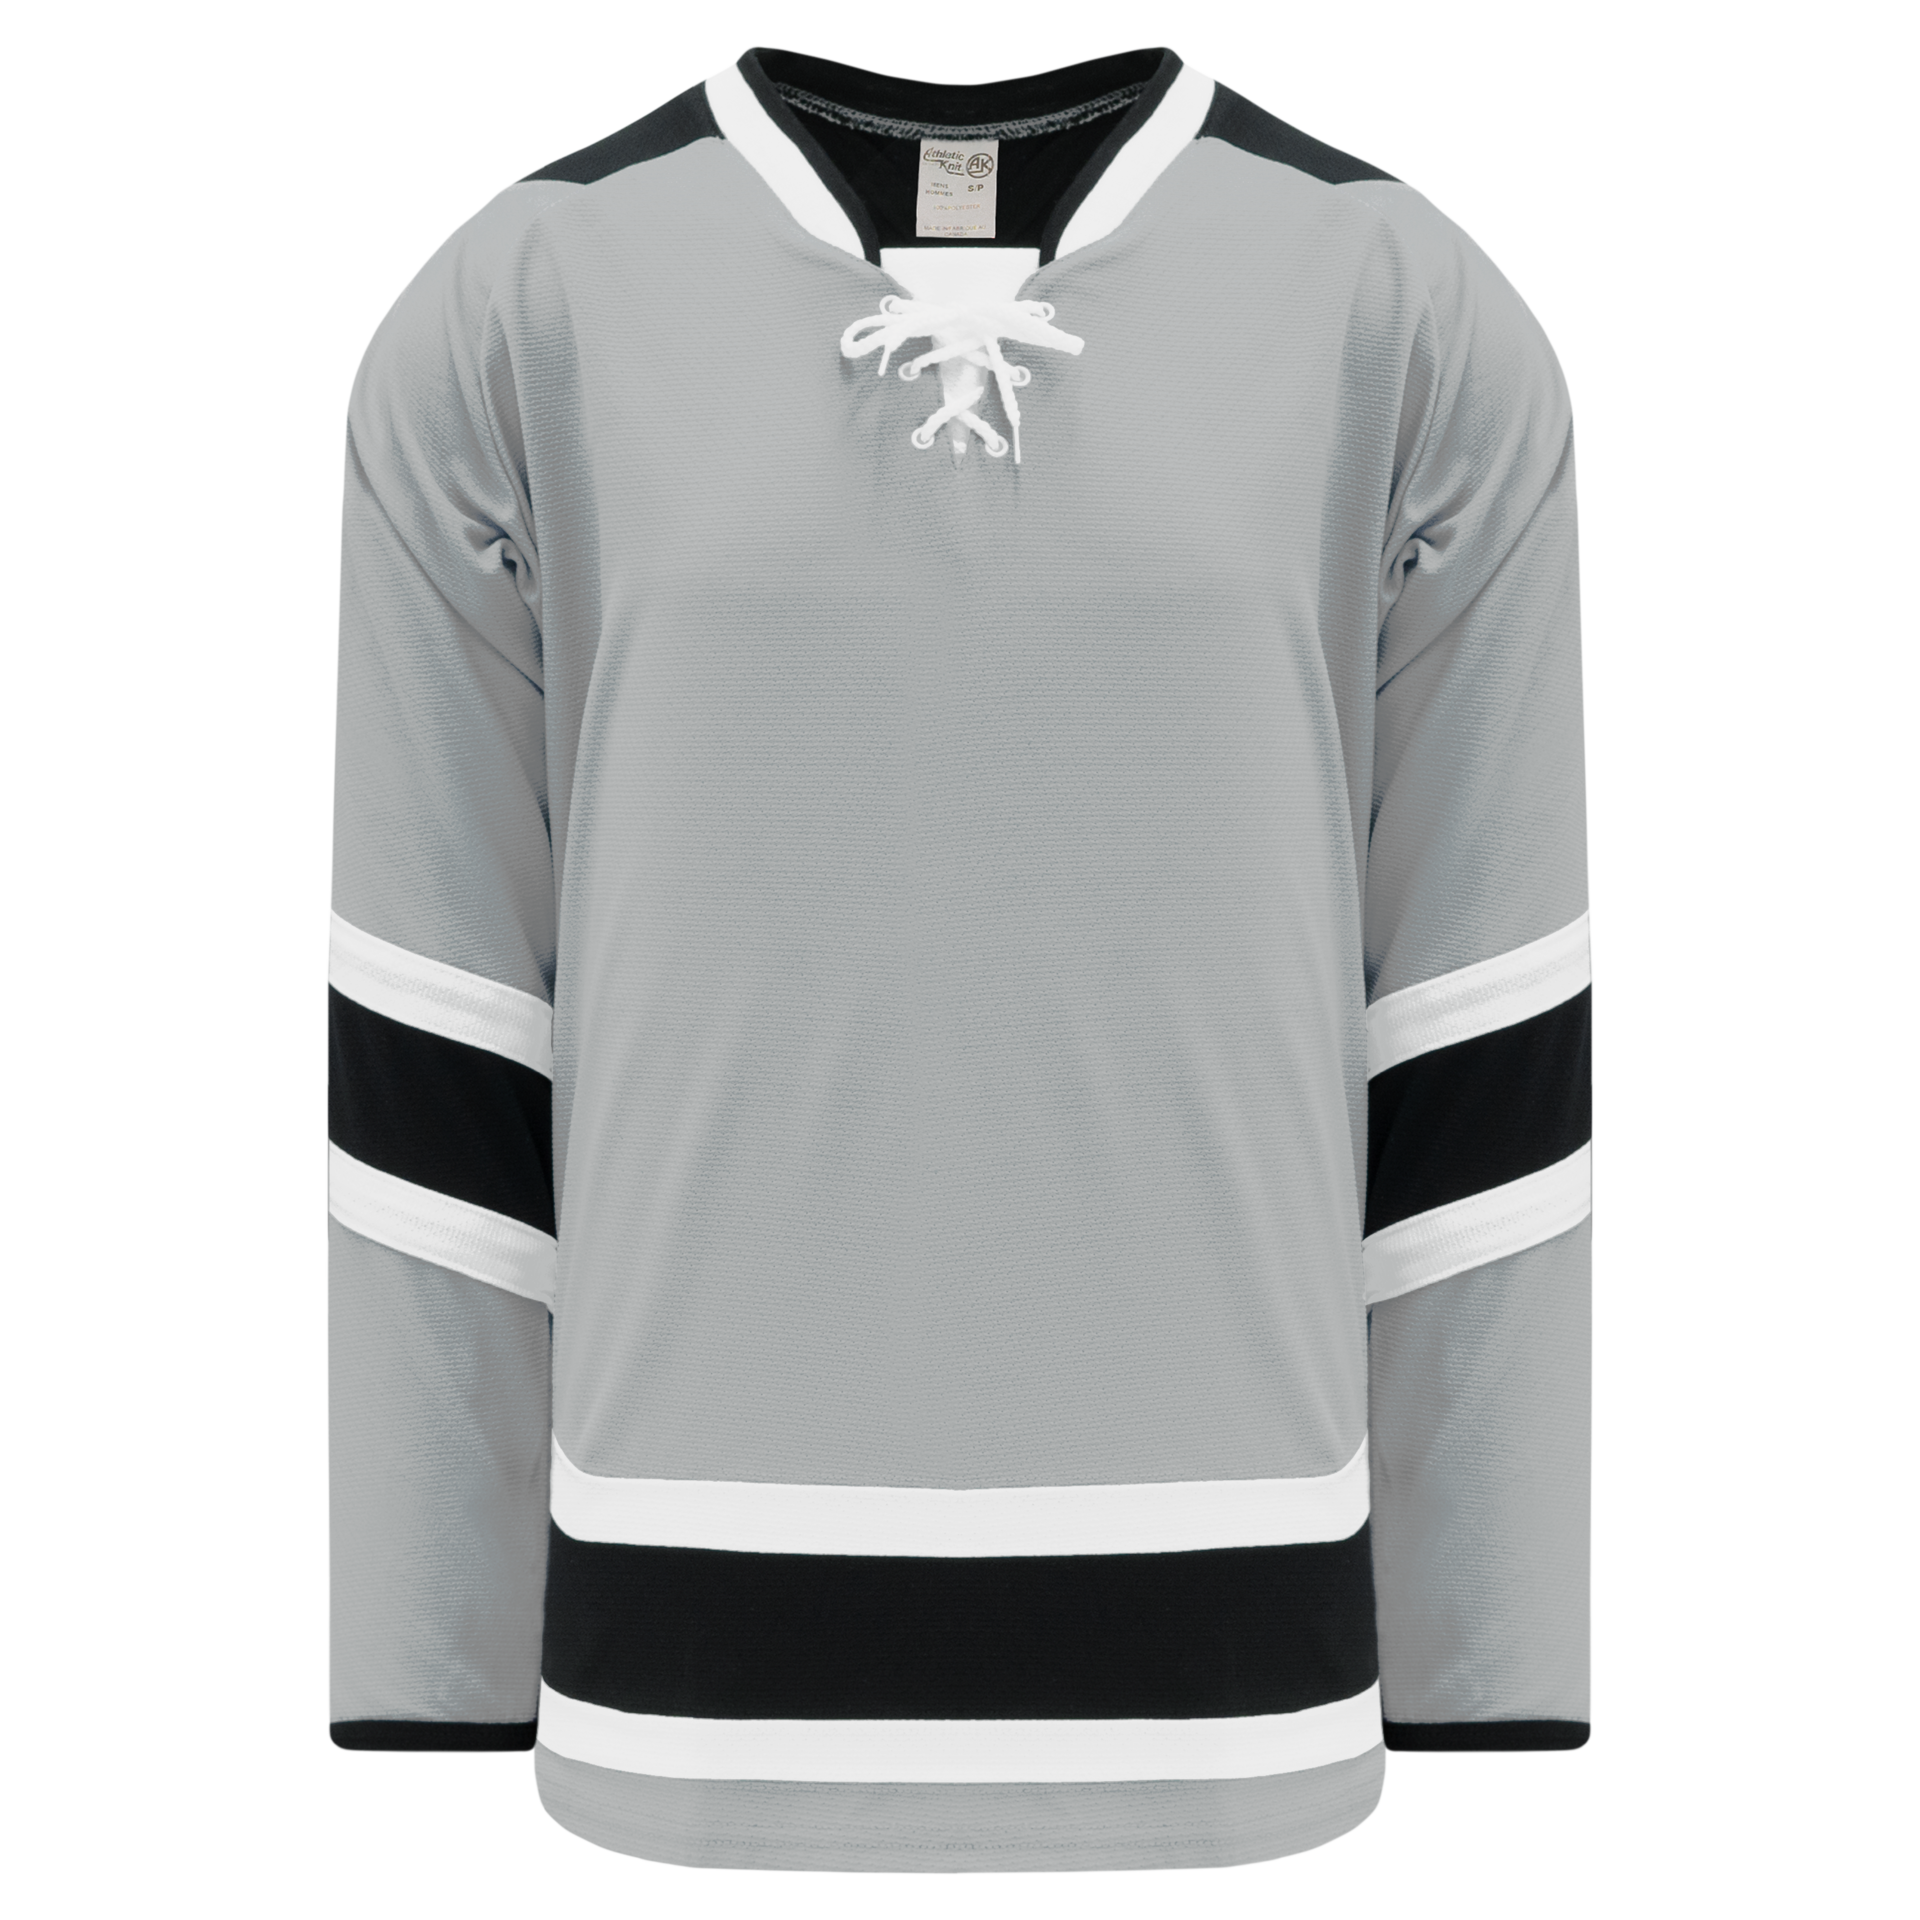 los angeles kings hockey jersey